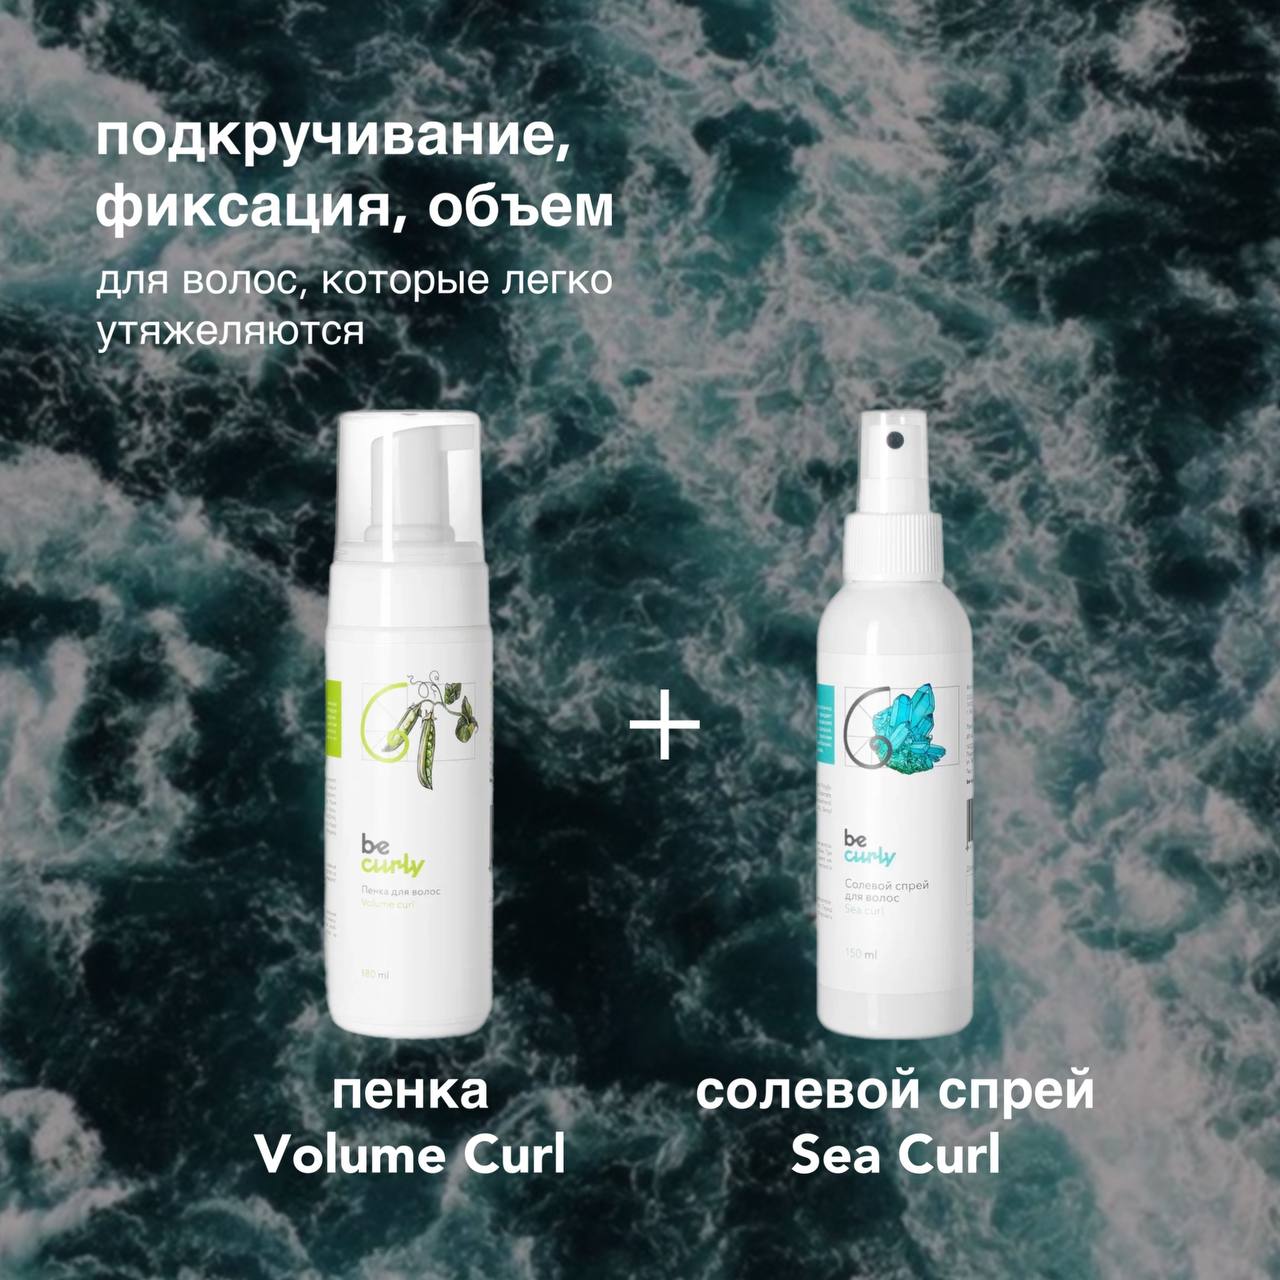  Пенка Volume curl  + солевой спрей Sea curl 